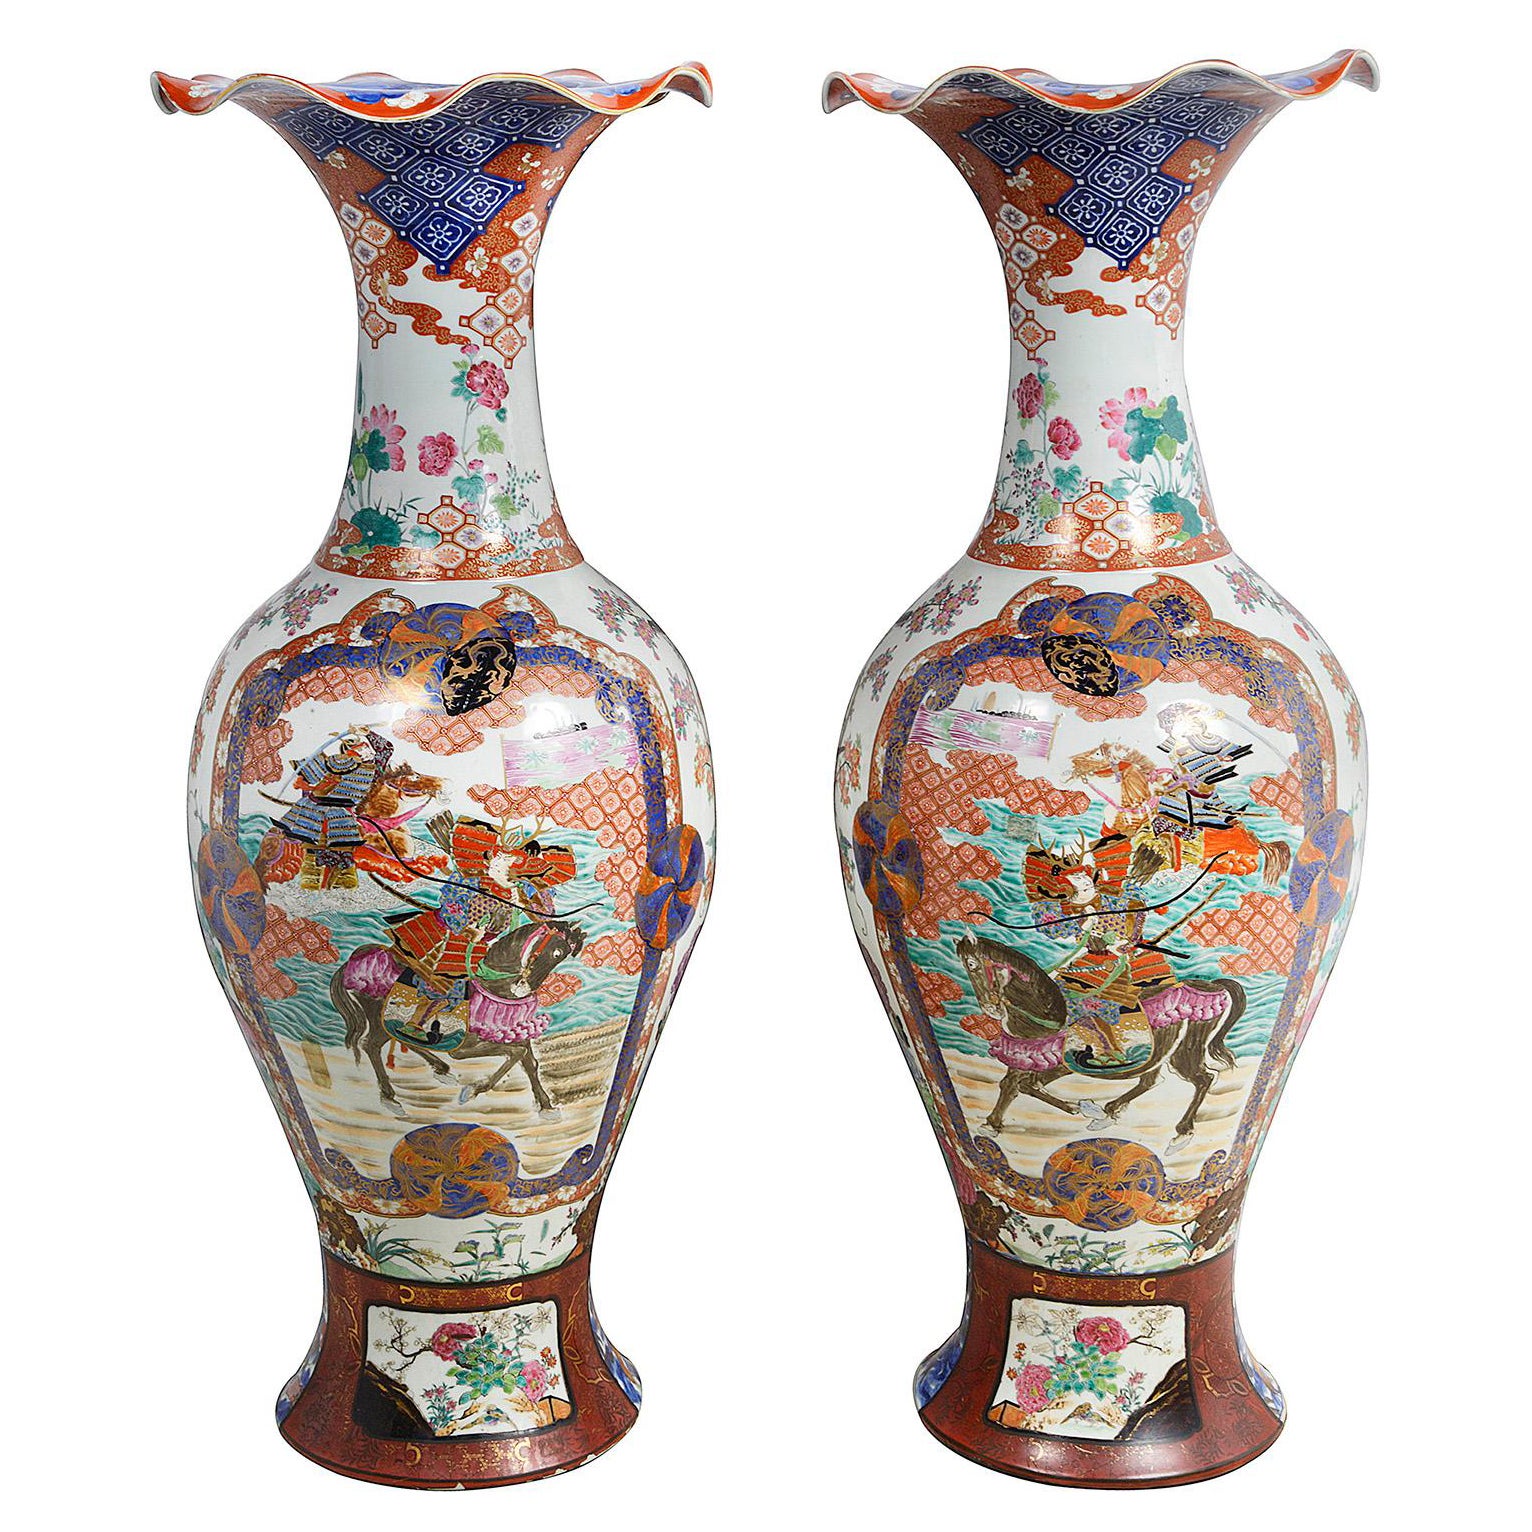 Großes Paar japanischer Imari-Vasen des 19. Jahrhunderts